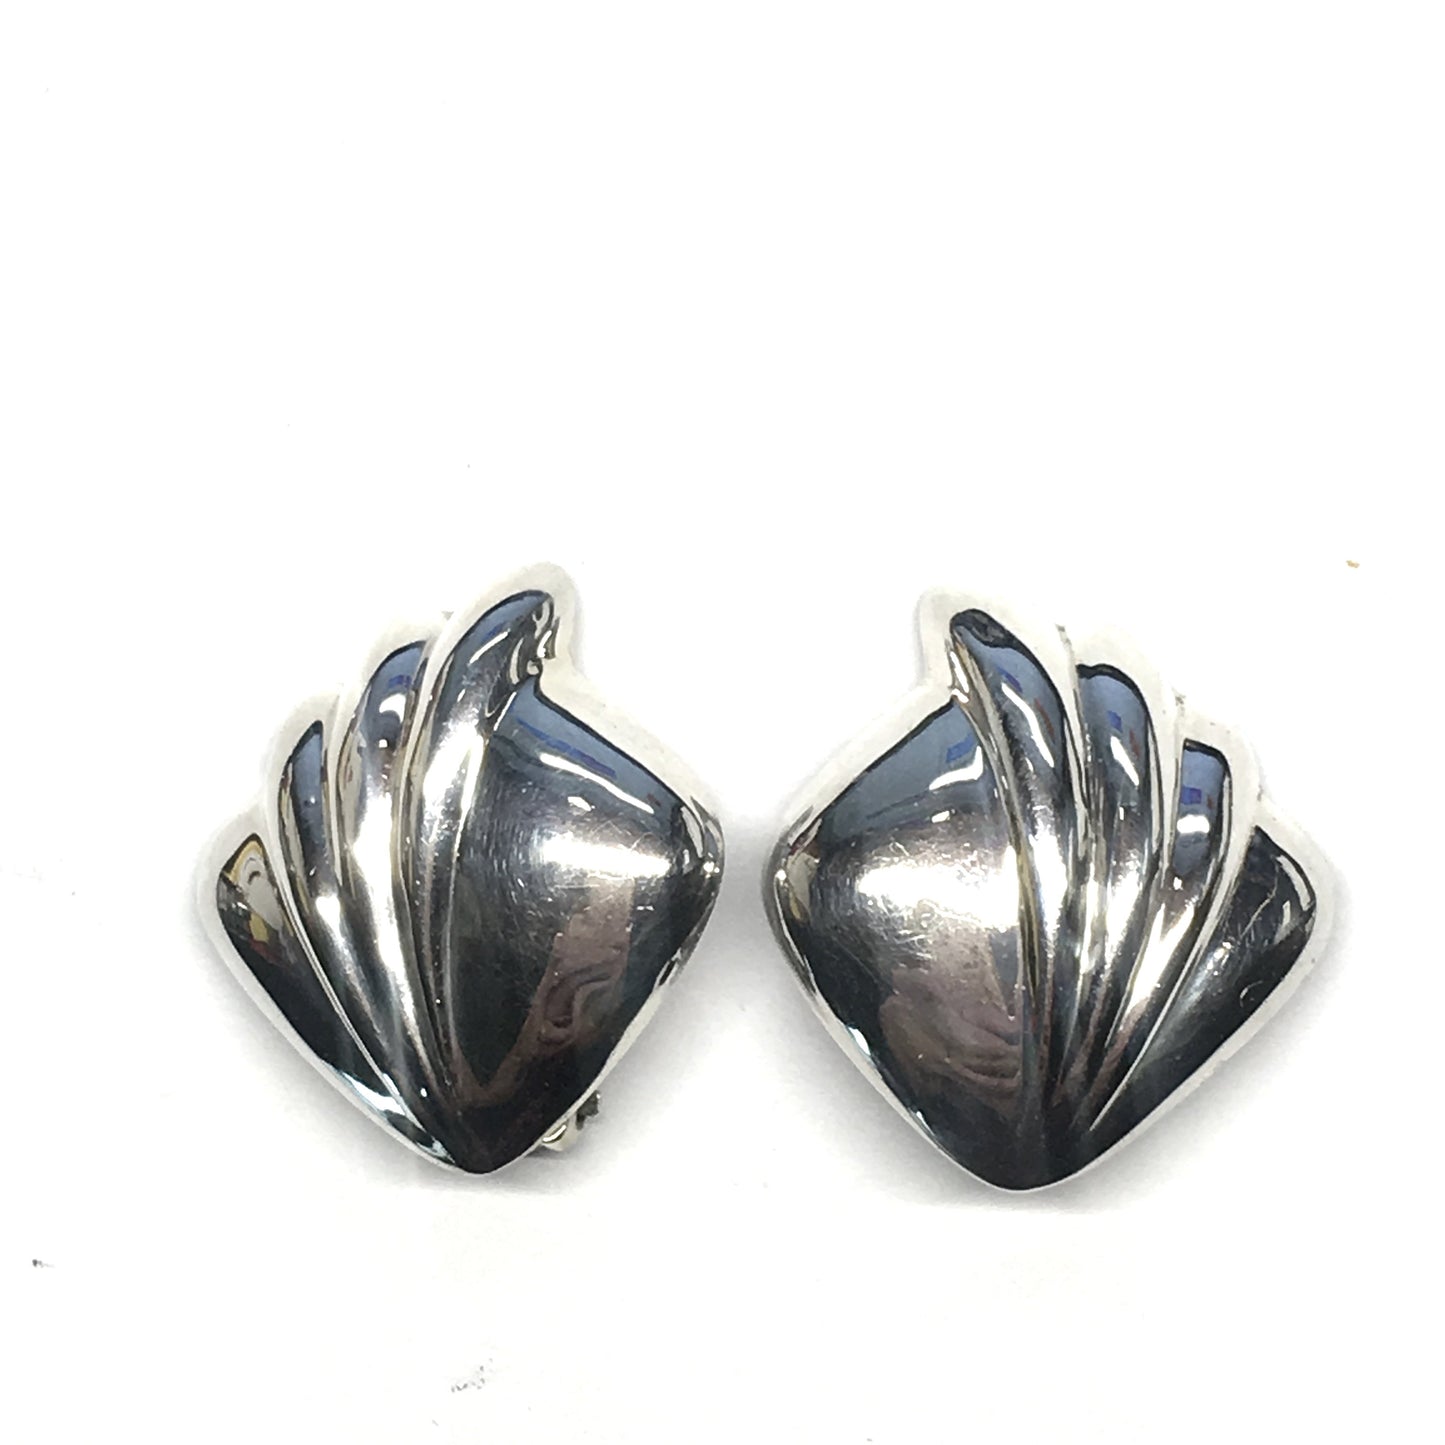 Used Jewelry > Earrings | Womens Sterling Silver A Symmetrical Scalloped Design Clip-On Earrings- Blingschlingers Jewelry